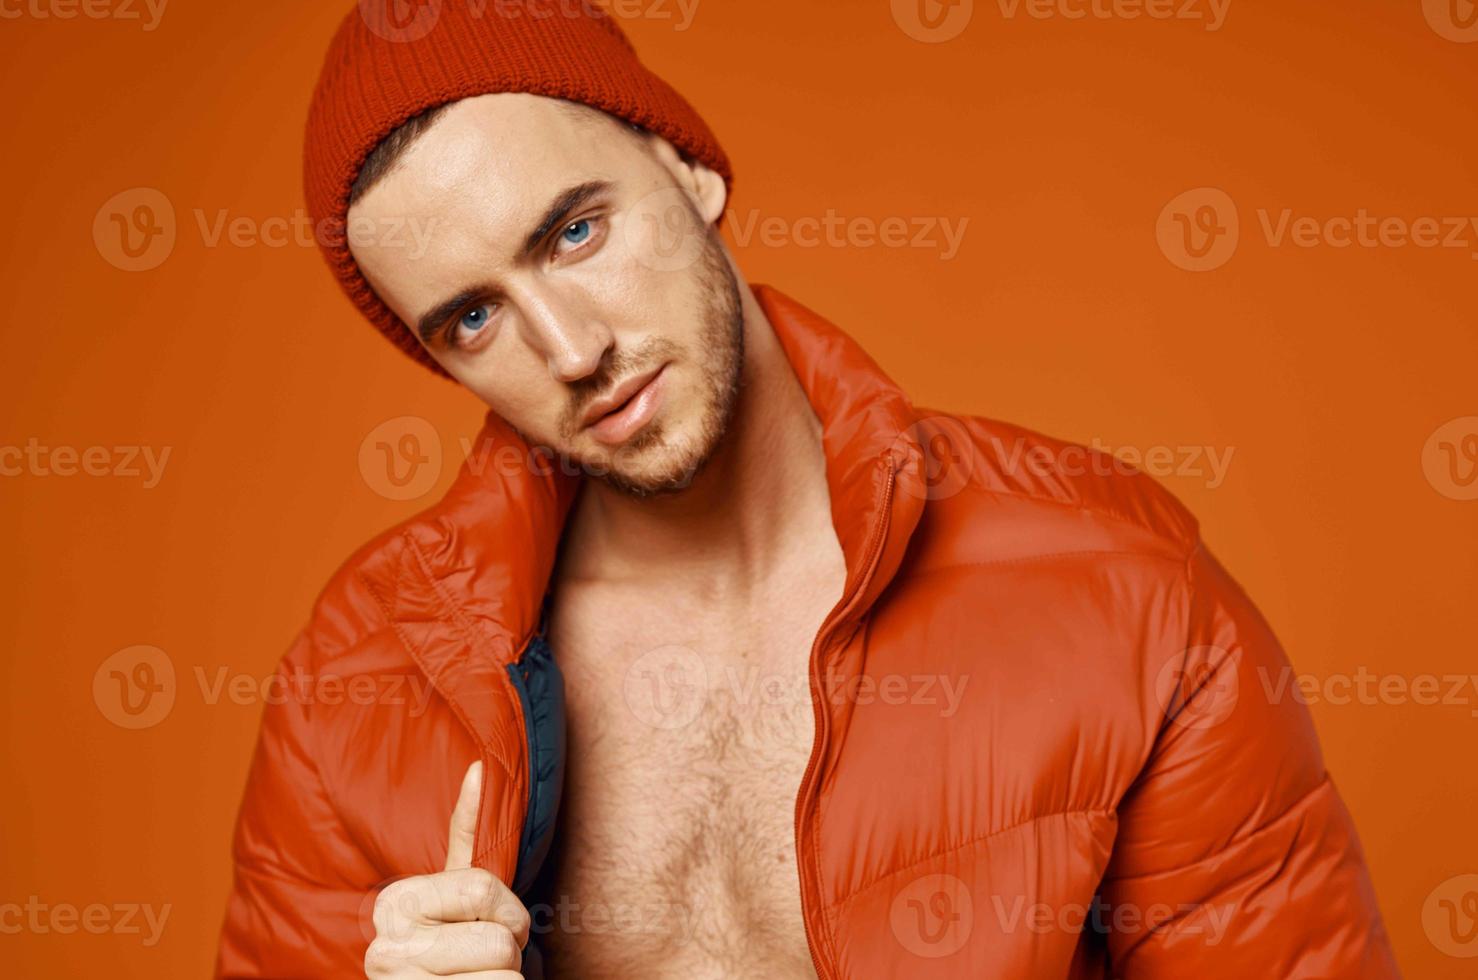 elegante homem dentro vermelho Jaqueta nu corpo estúdio laranja fundo foto